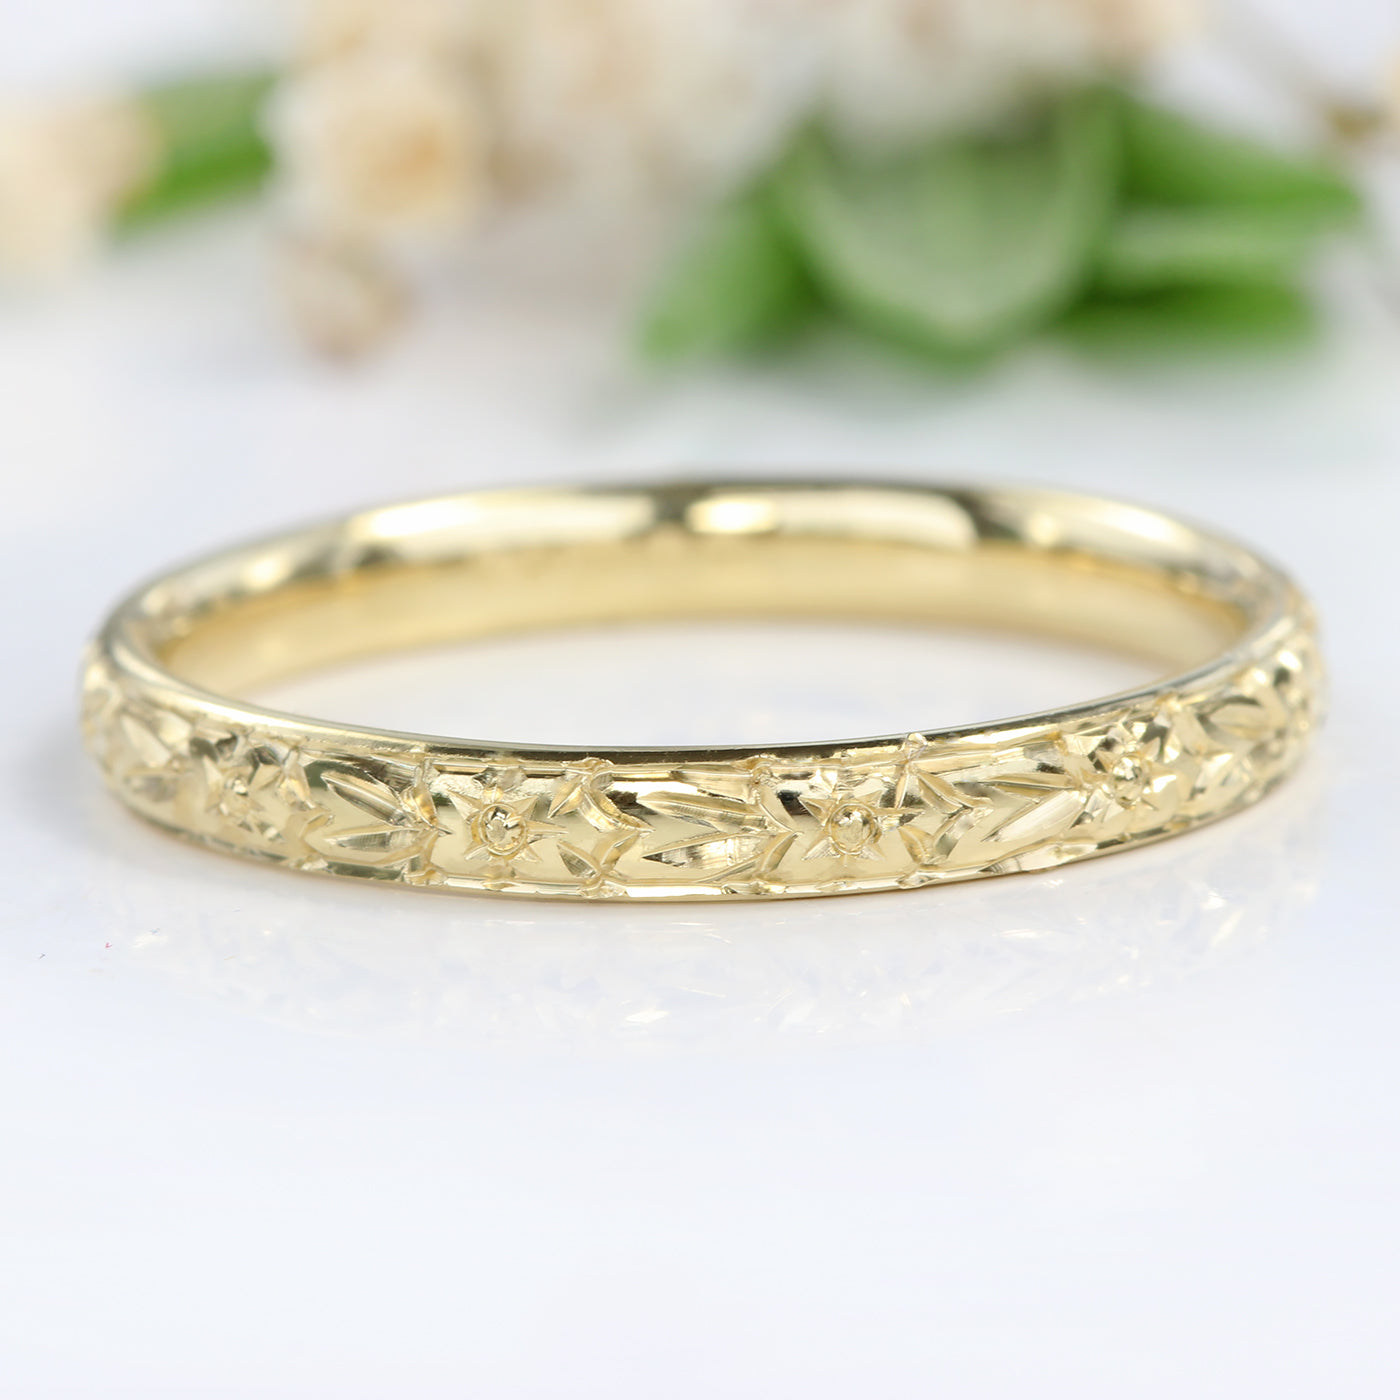 18ct Gold Orange Blossom Engraved 2.5mm Comfort Fit Court Wedding Ring